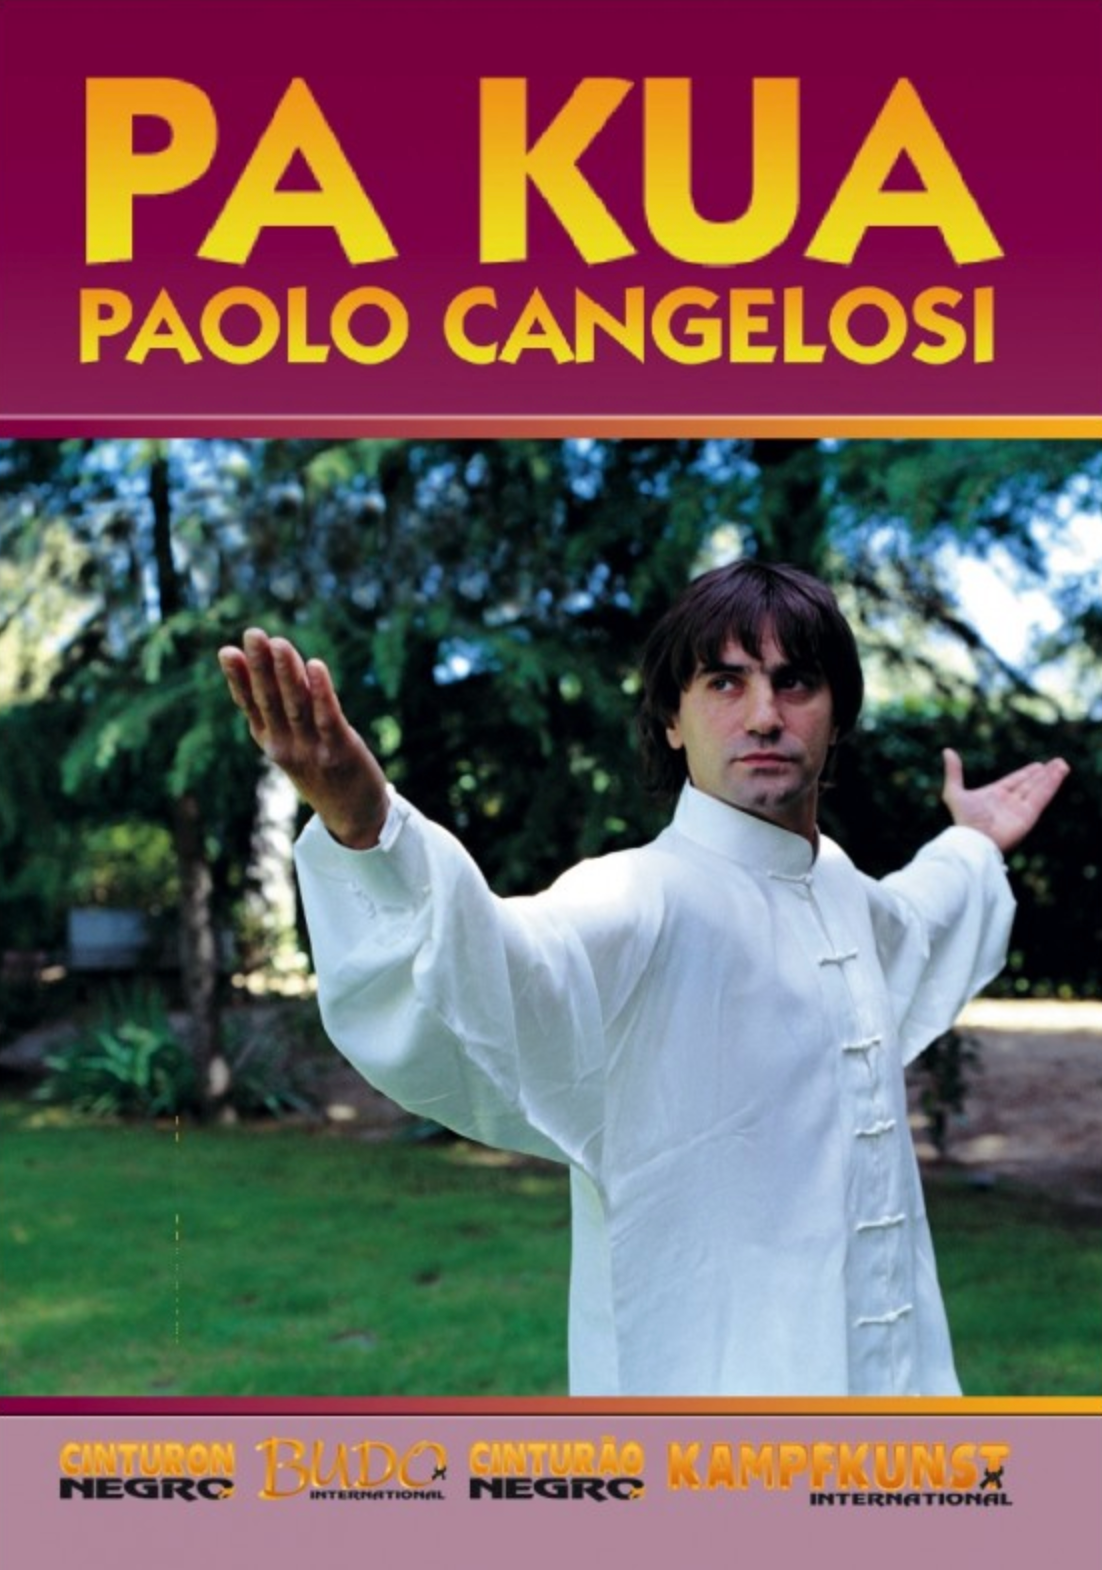 Kung Fu Pa Kua DVD by Paolo Cangelosi - Budovideos Inc